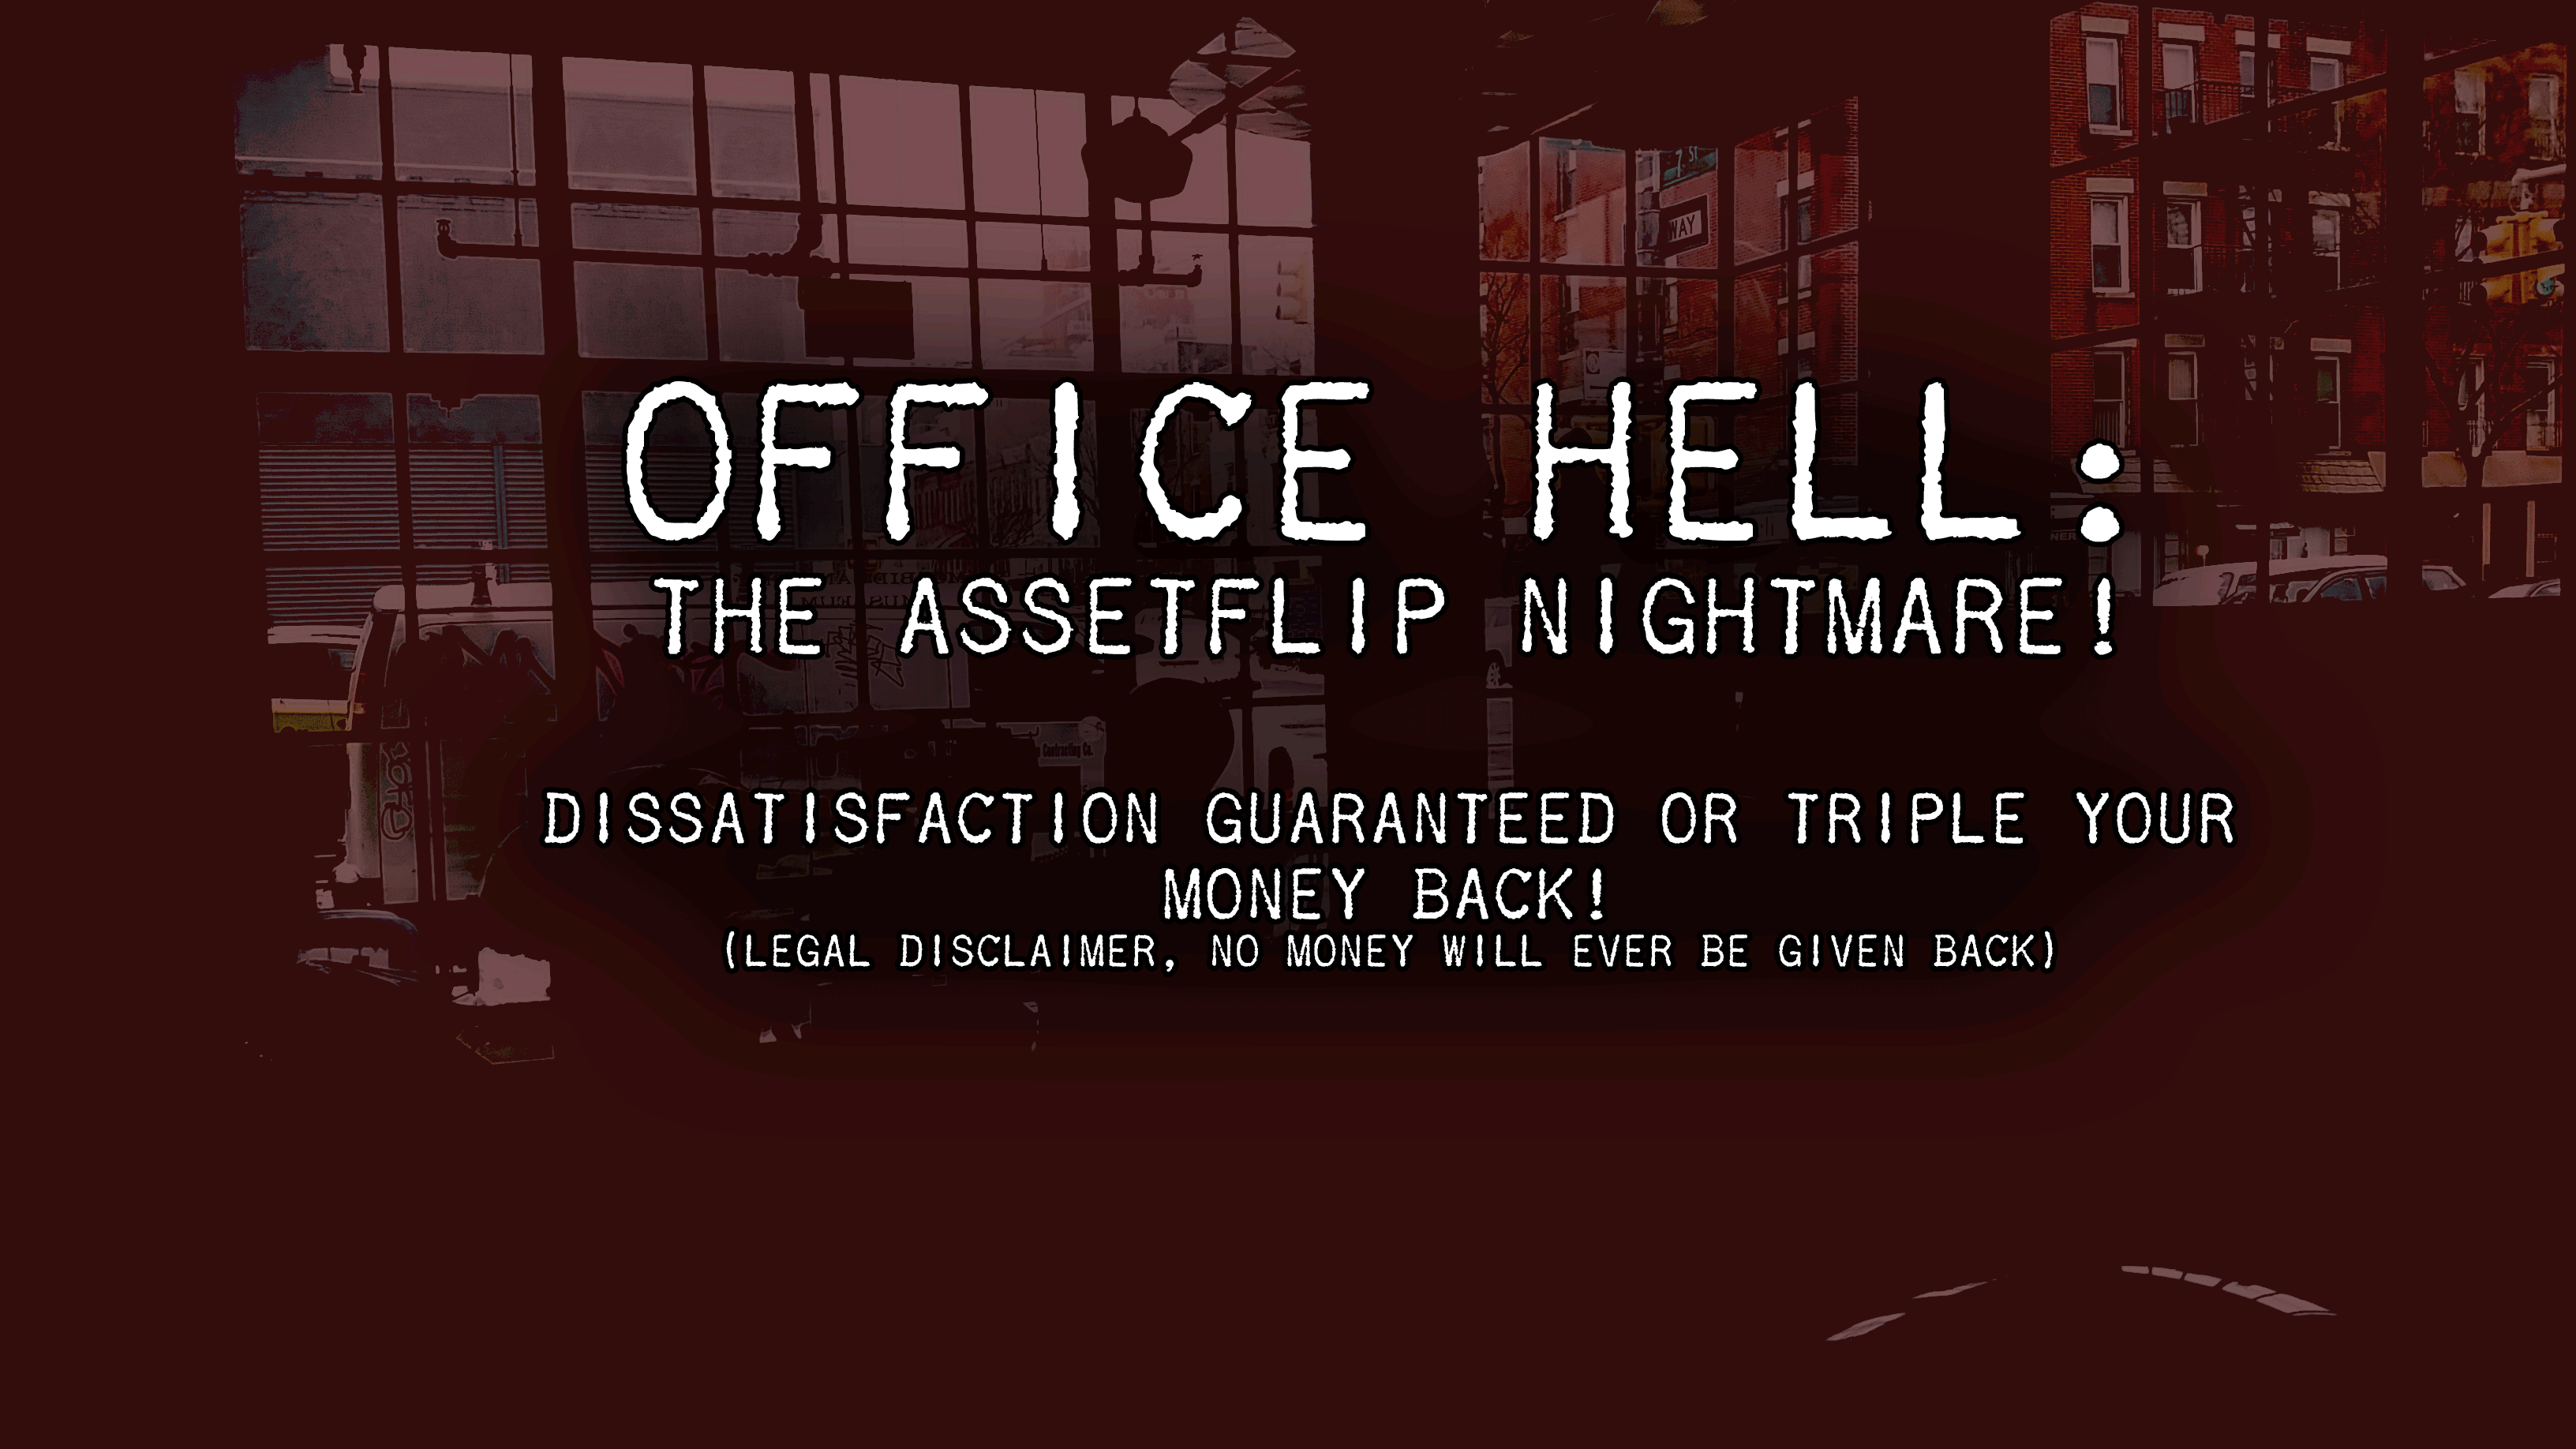 Office Hell: The Assetflip Nightmare!